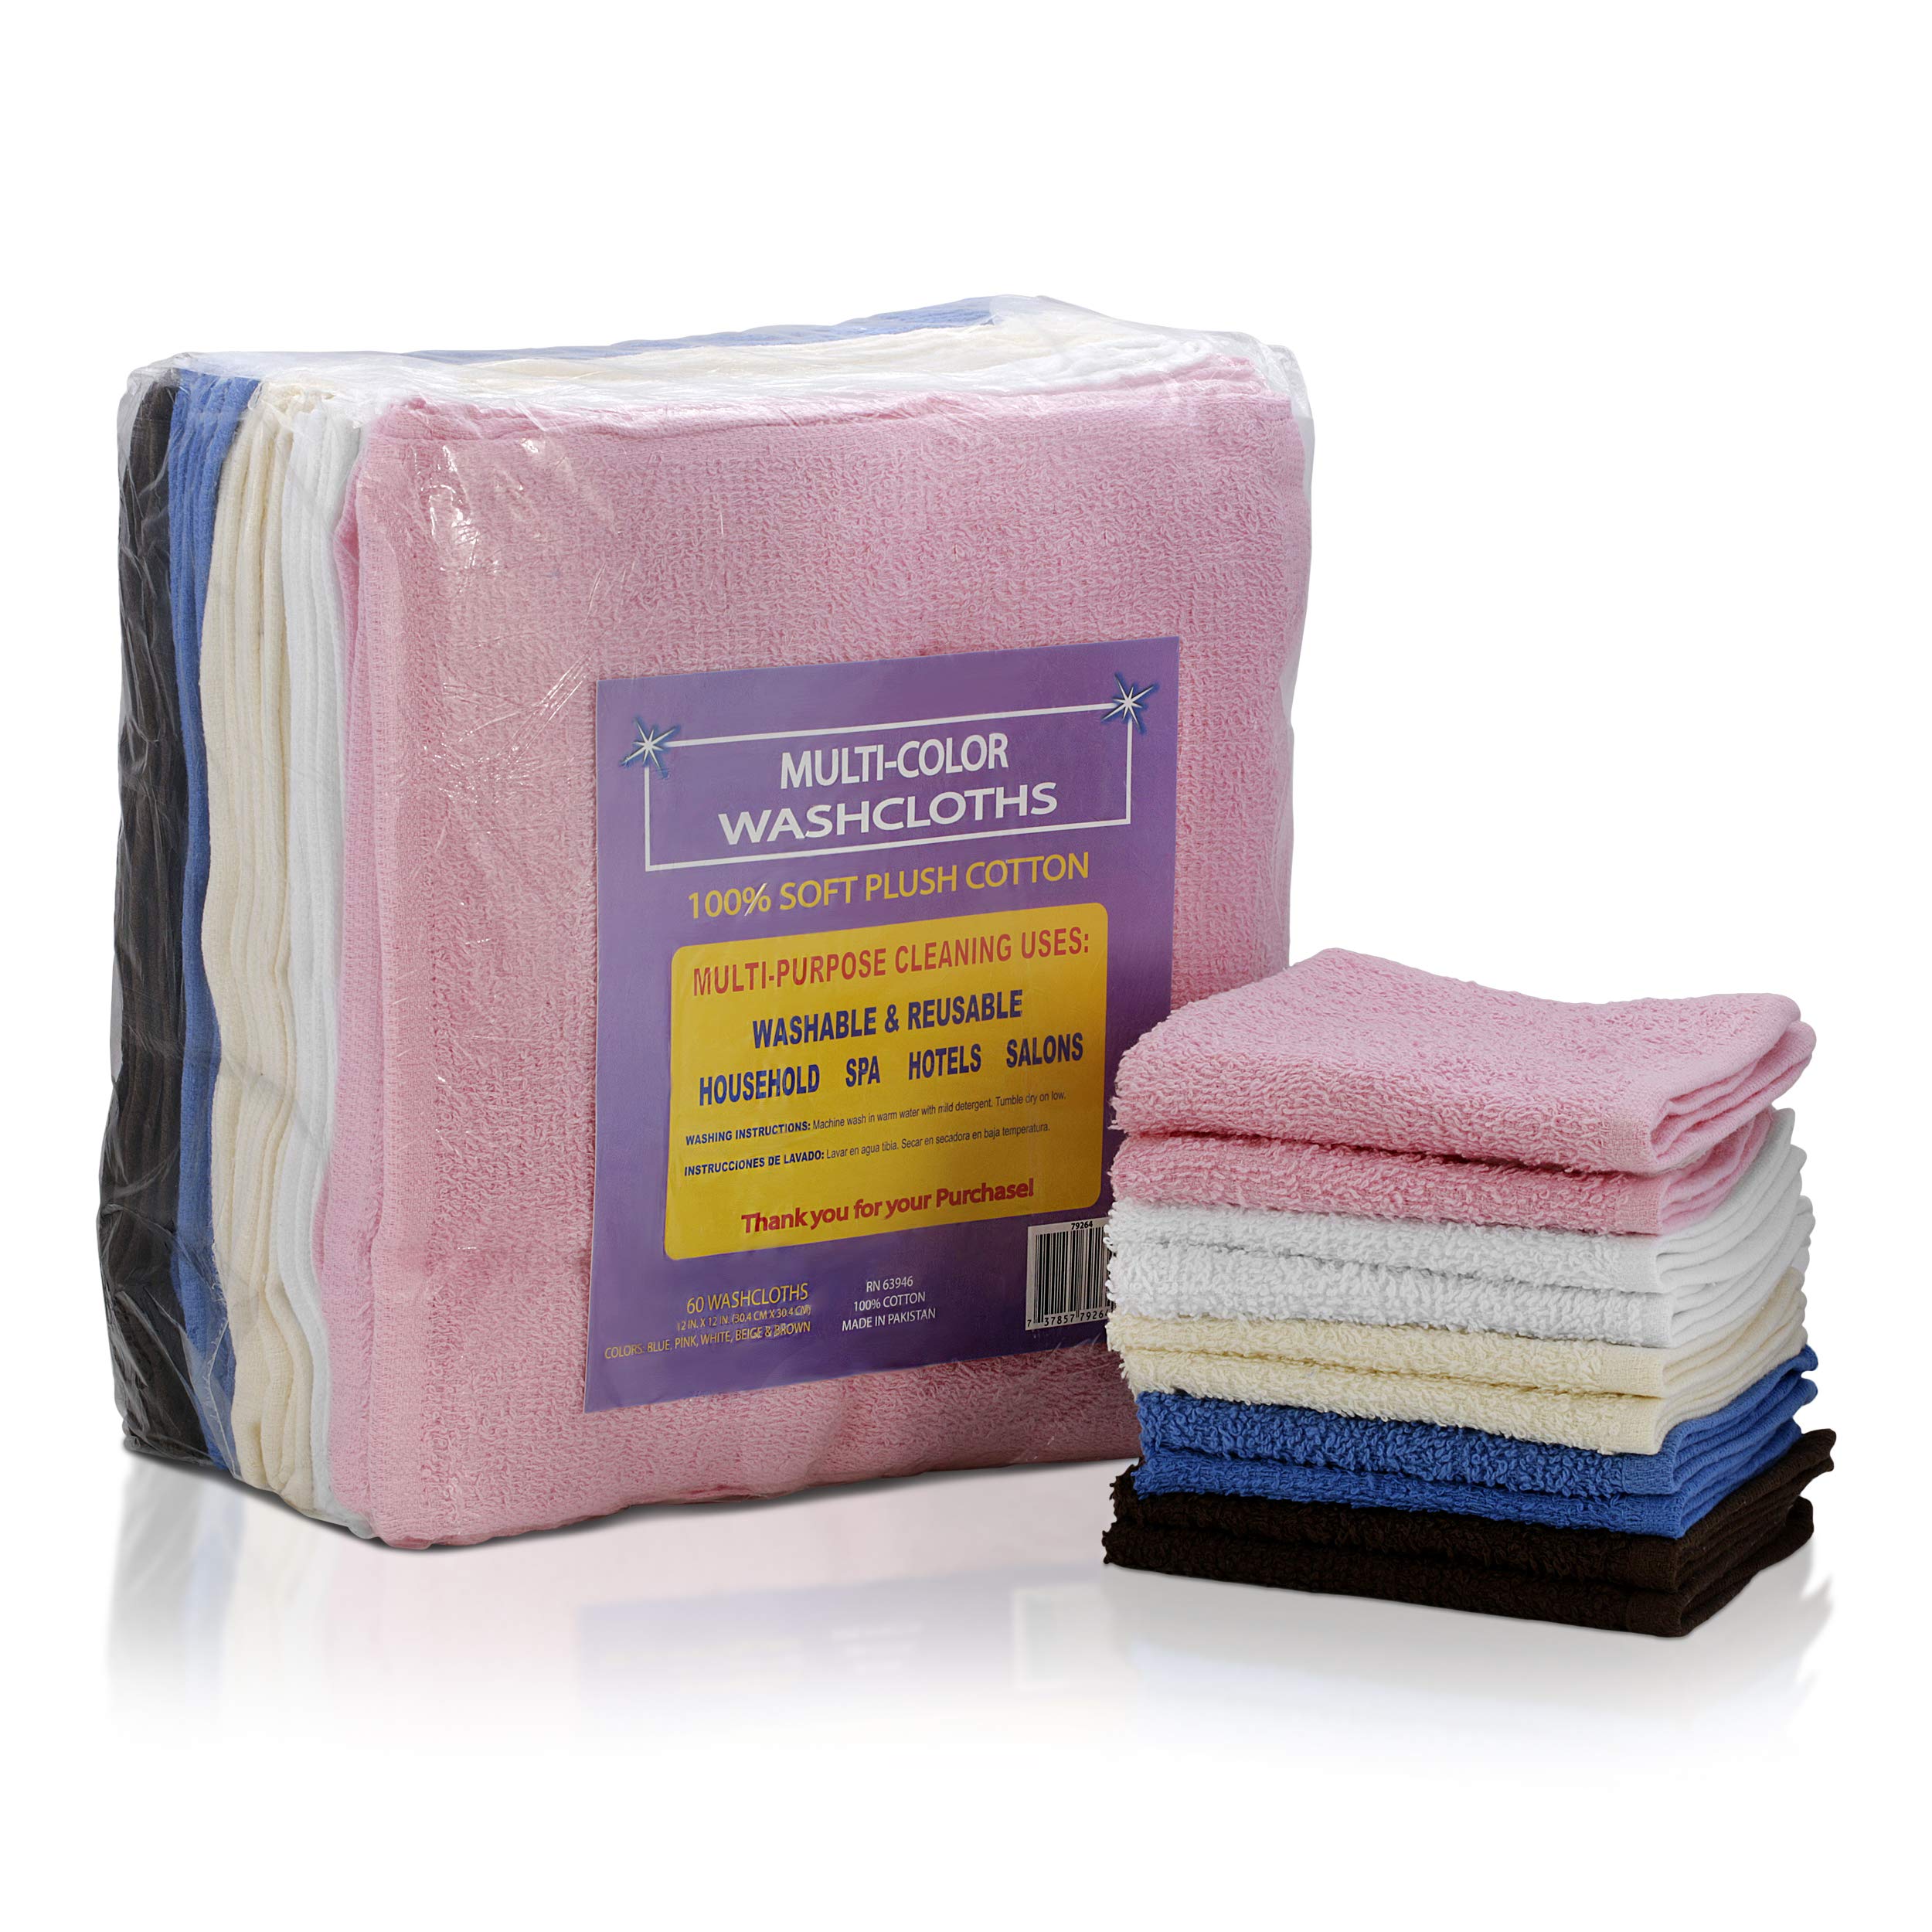 Simpli-Magic 79264C Cotton Washcloths, Size: 12”x12”, Multi Color, (Pack of 8, 400 Count Total)